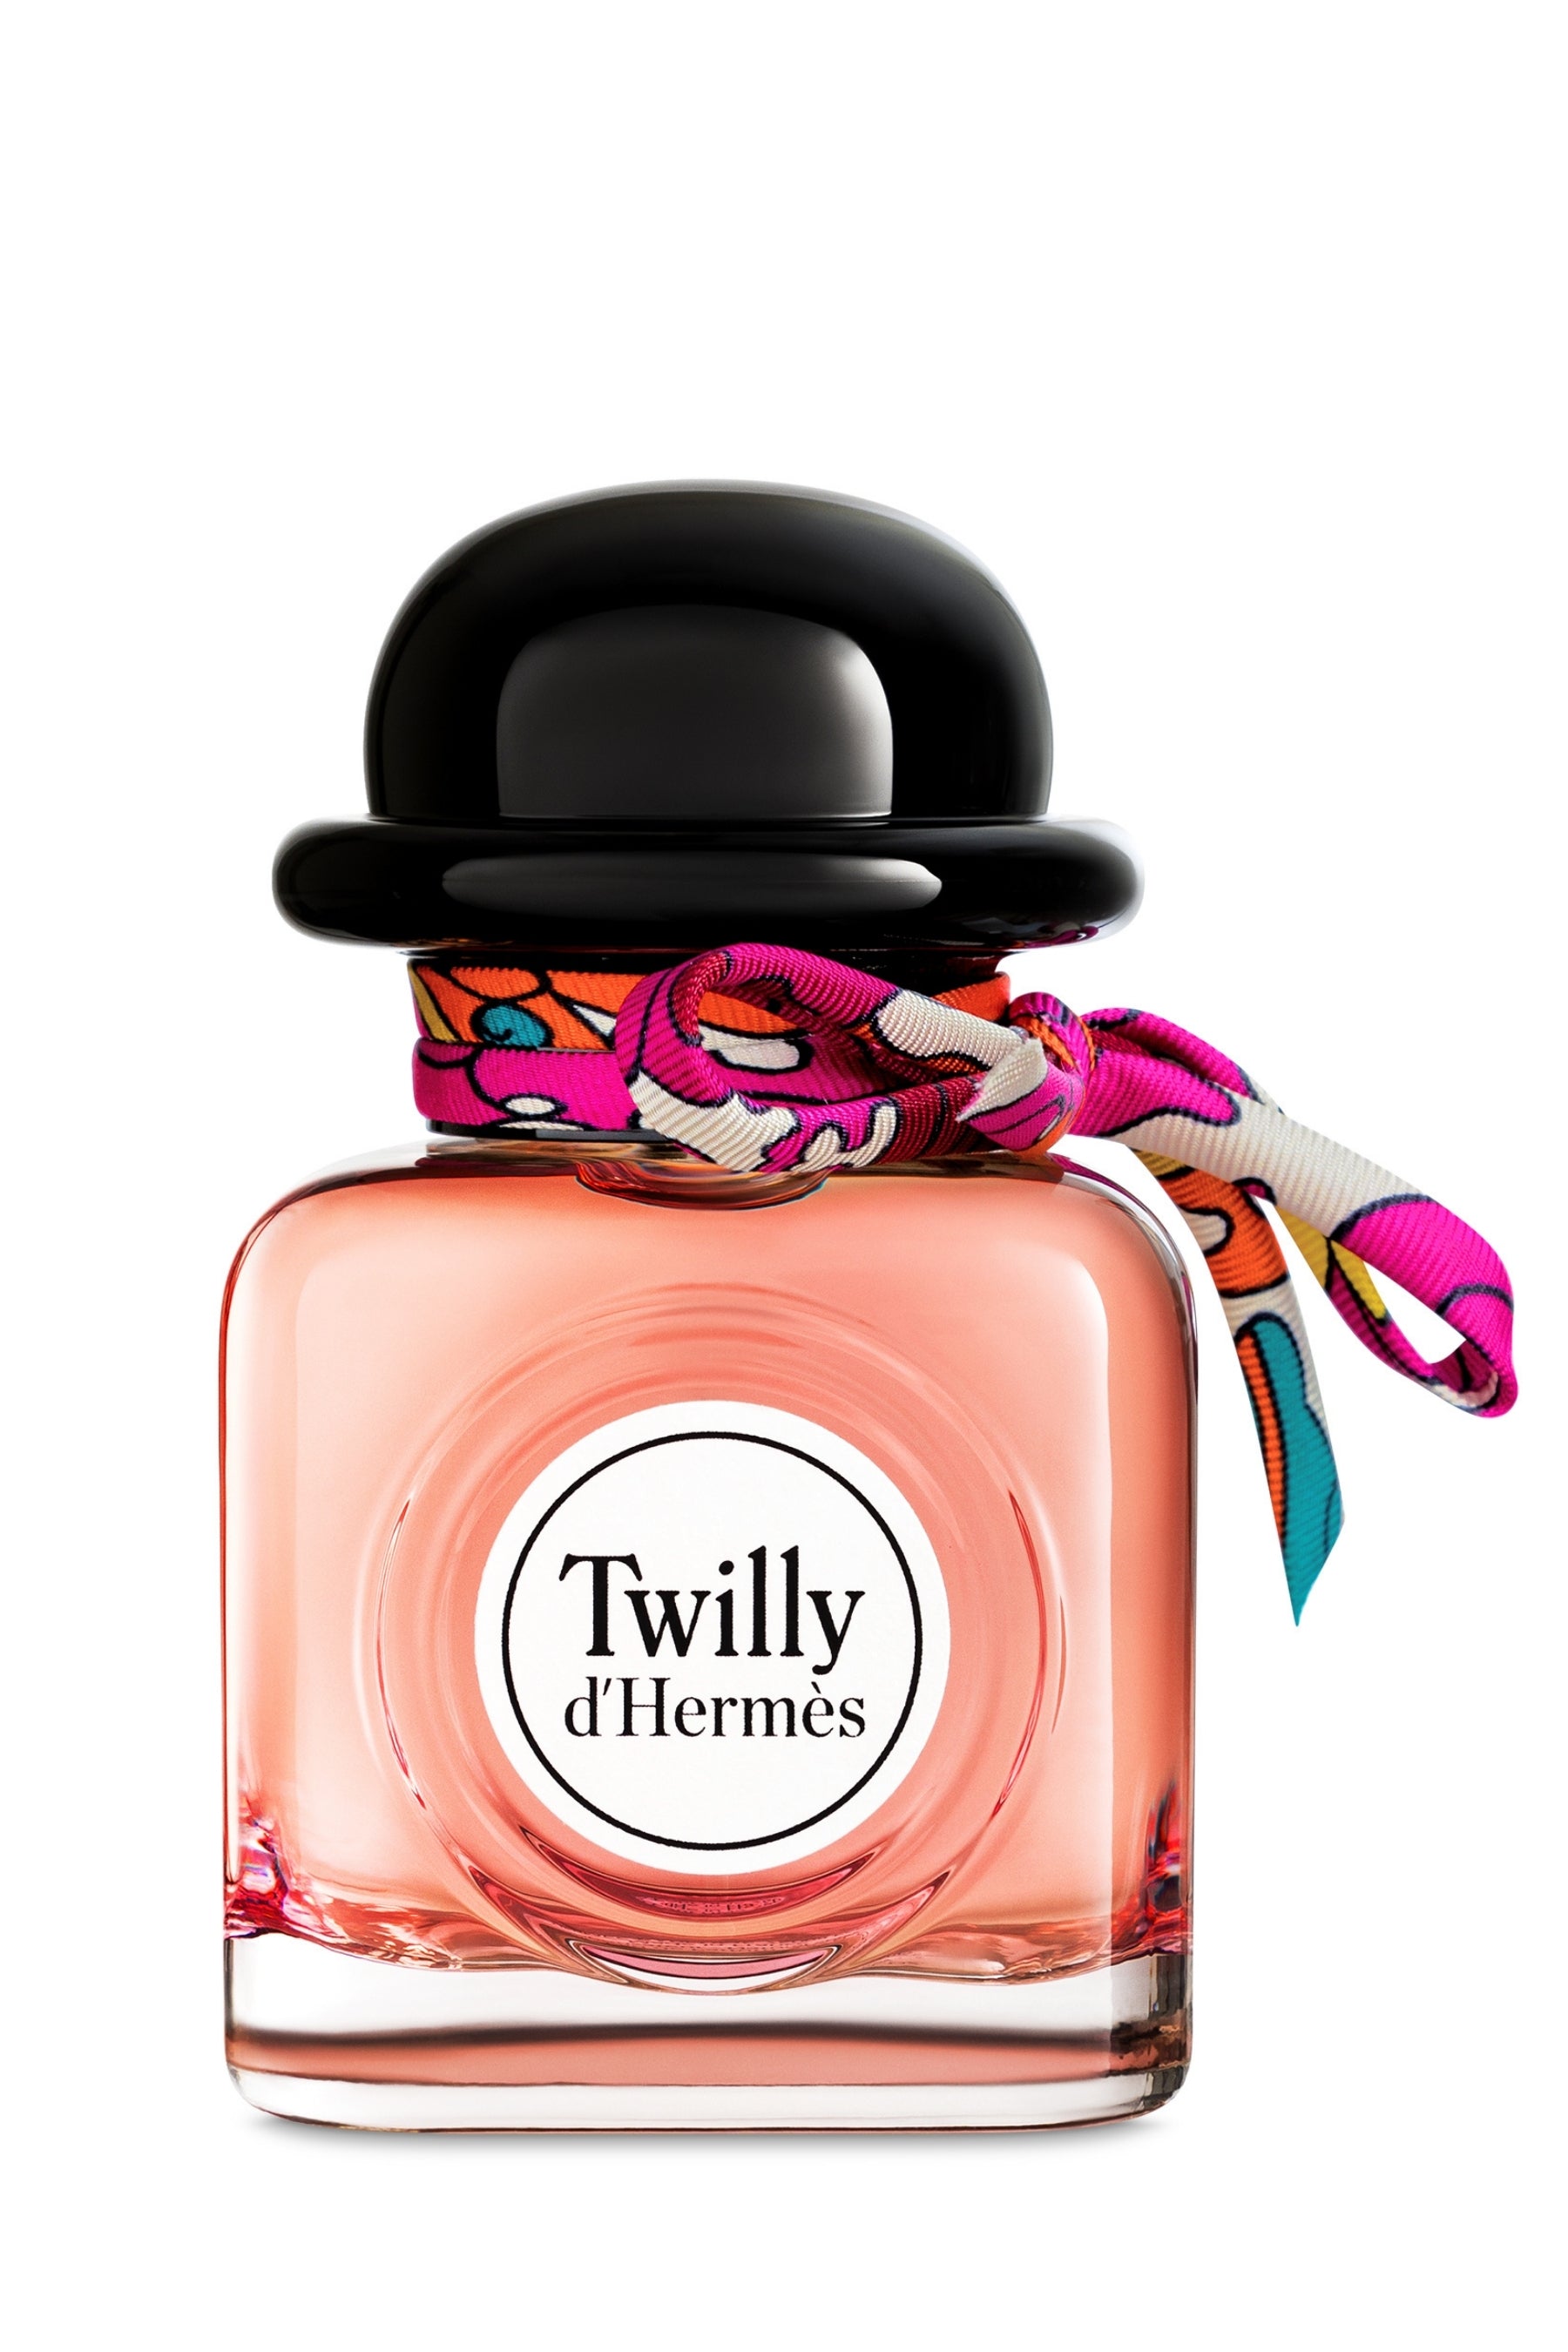 Twilly D'Hermès Perfume | | REBL Scents